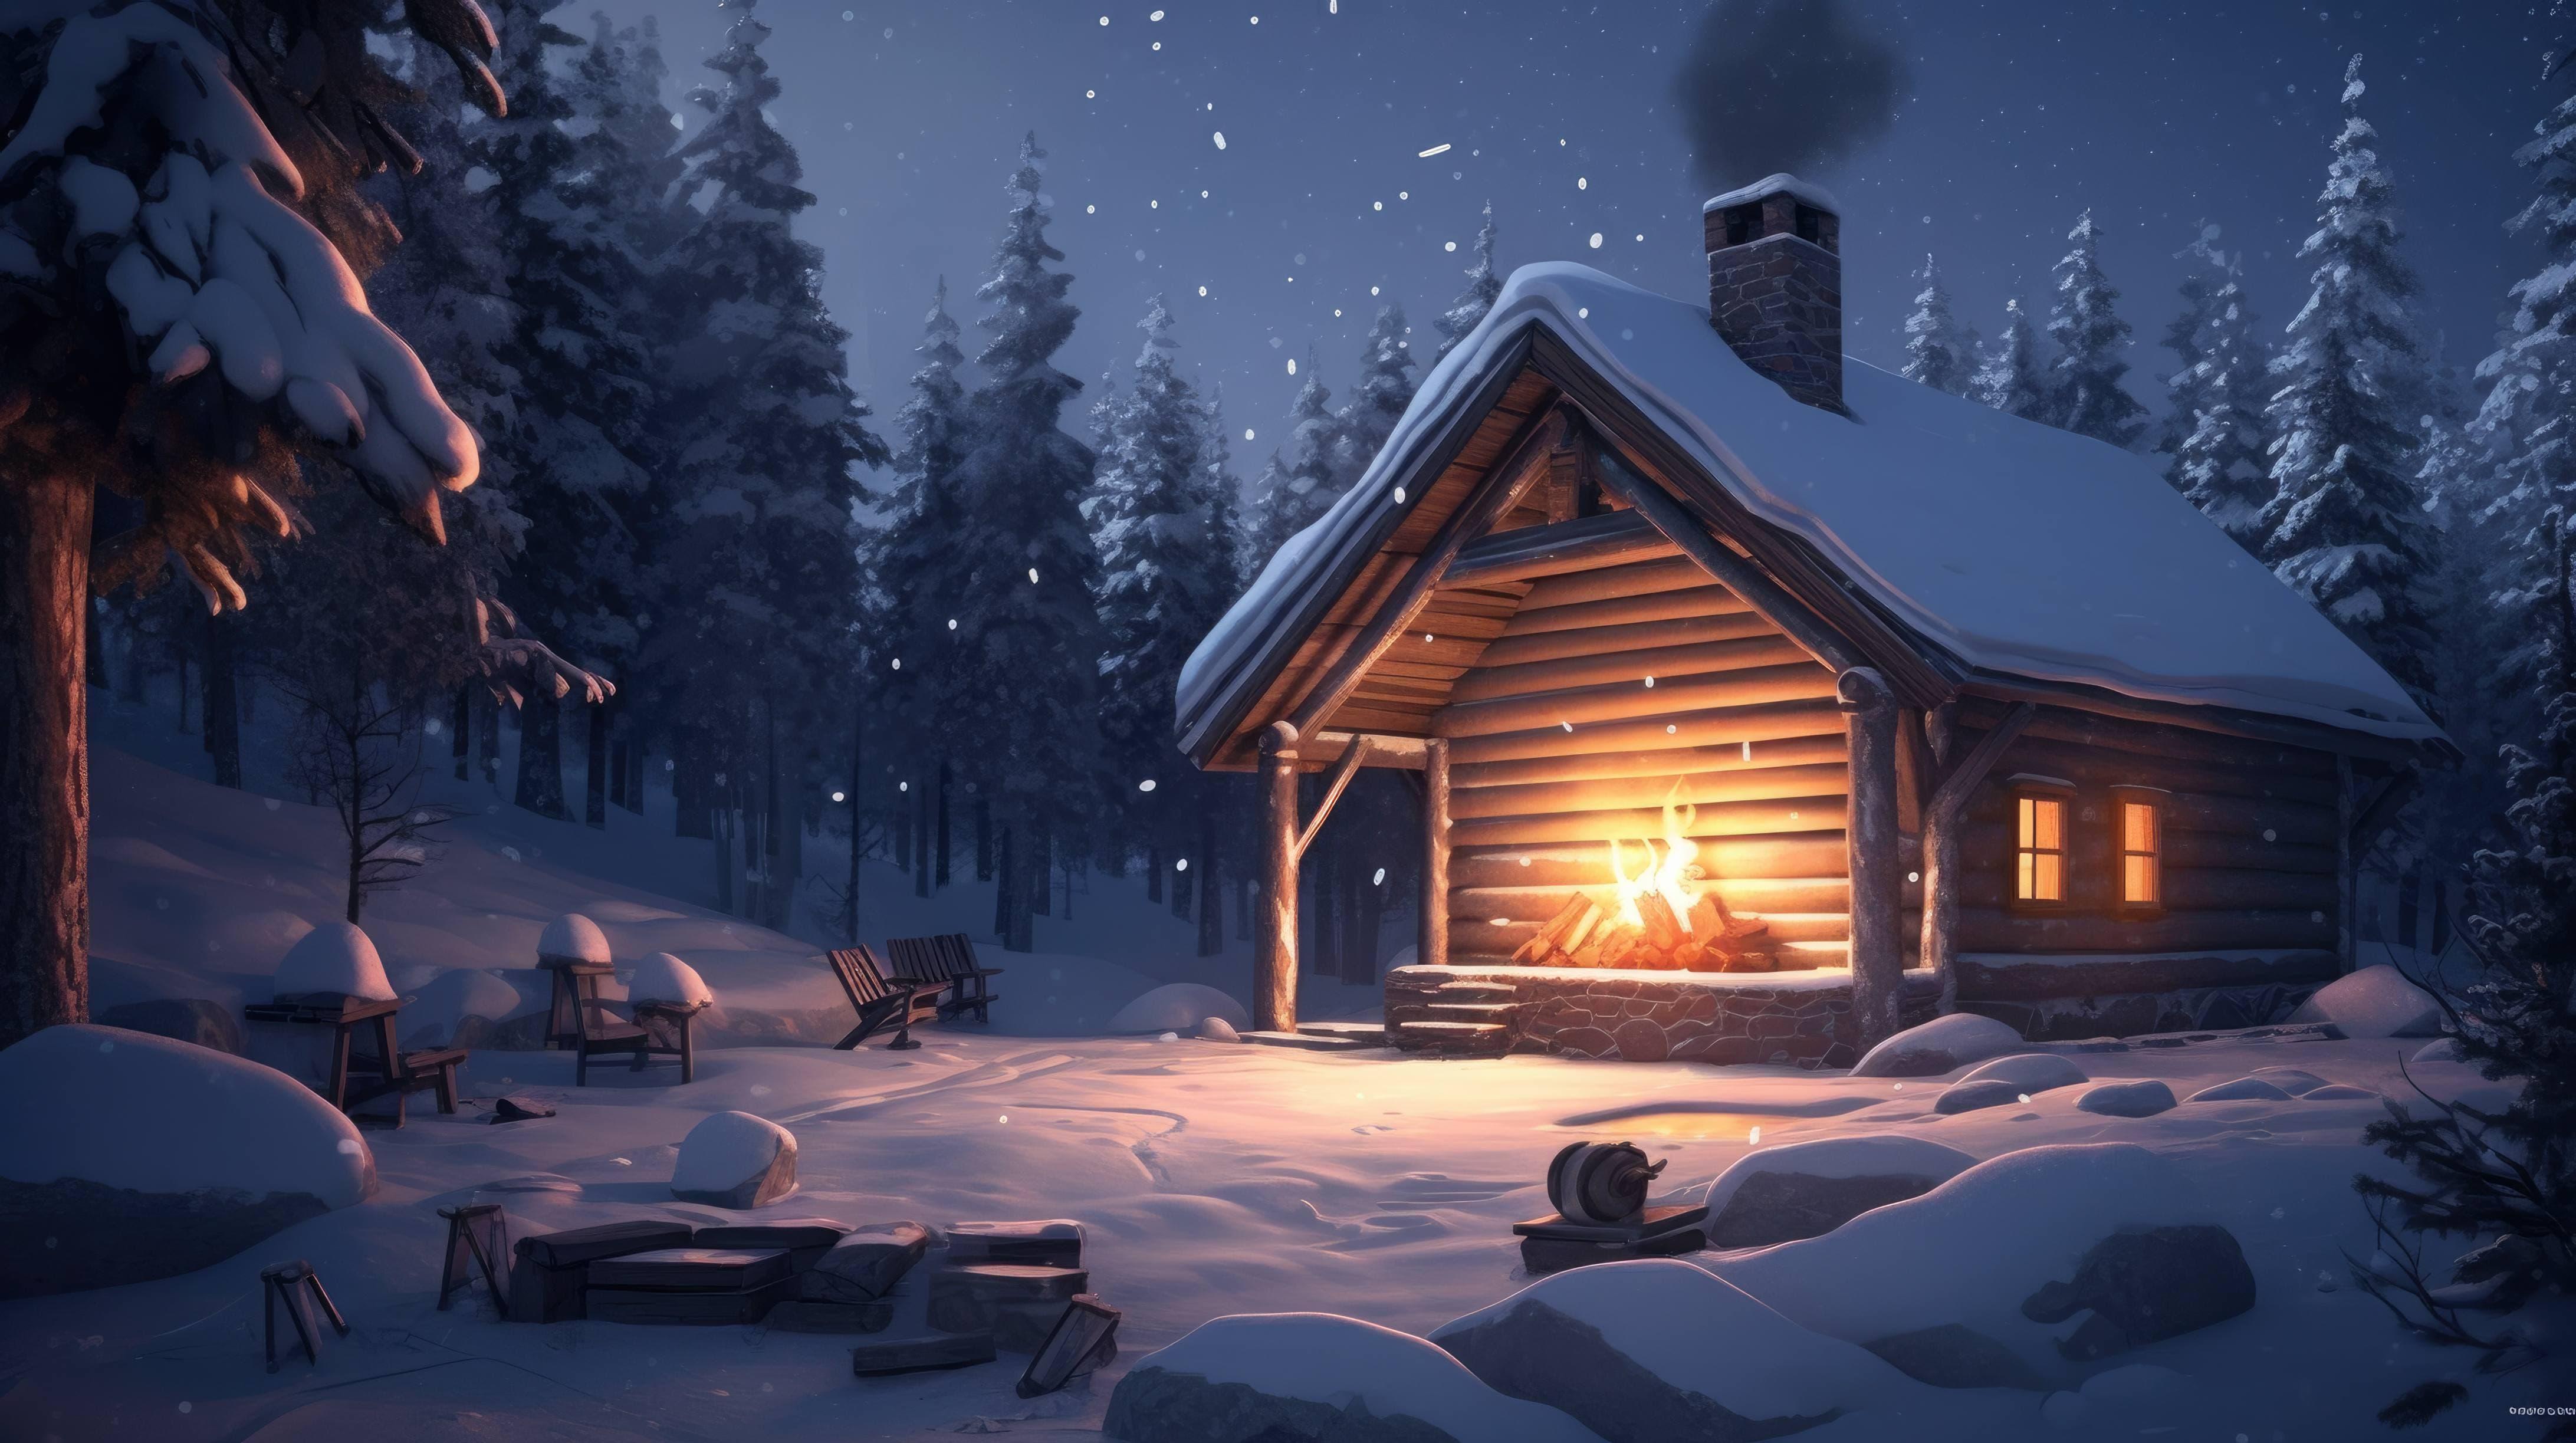 An Enchanting Desktop Wallpaper Featuring A Cozy Winter Cabin In